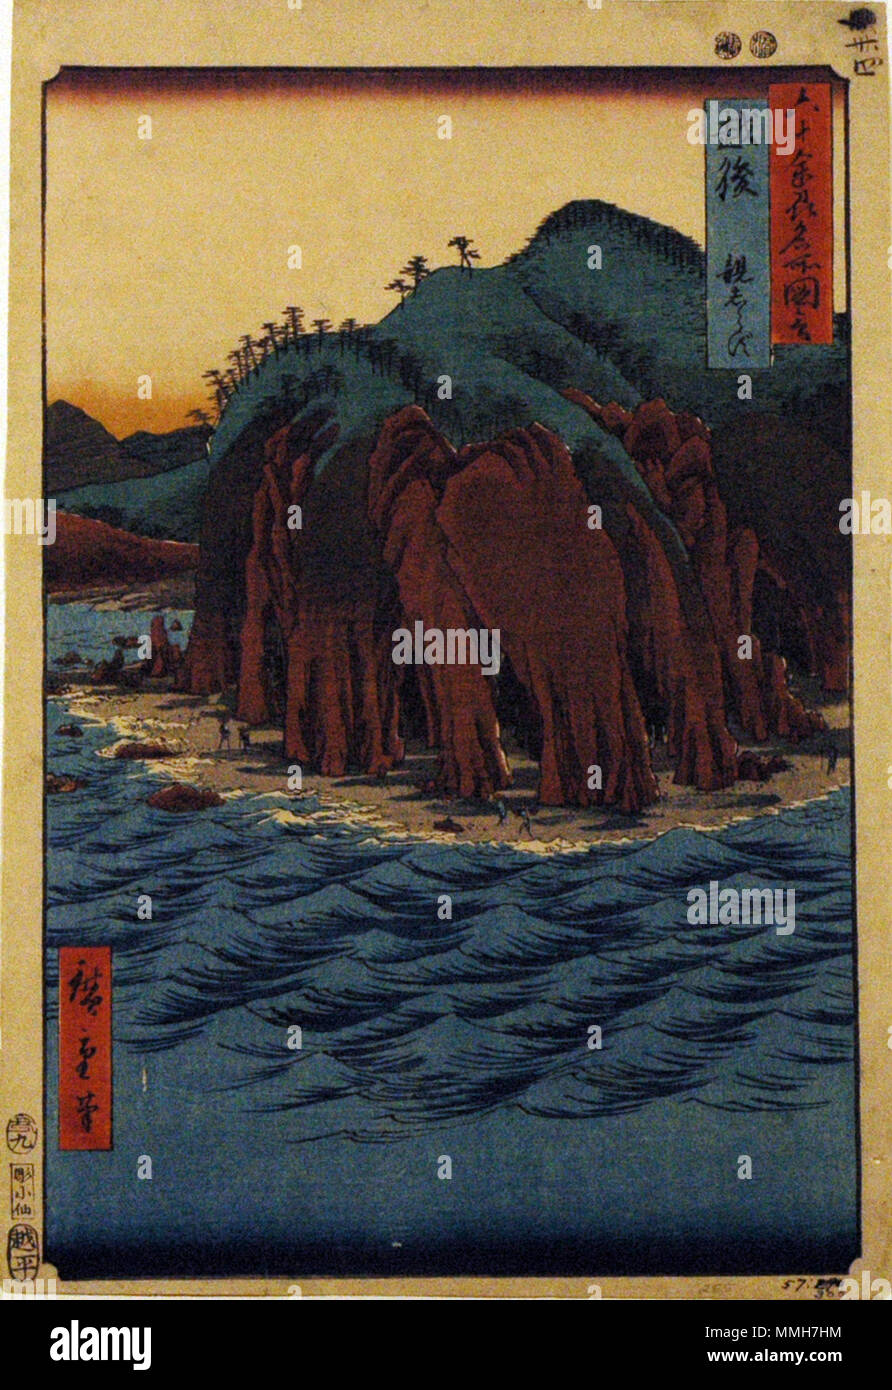 . English: Accession Number: 1957.300 Display Artist: Utagawa Hiroshige Display Title: 'Echigo Province, Oyashirazu' Translation(s): '(Echigo, Oyashirazu)' Series Title: Famous Views of the Sixty-odd Provinces Suite Name: Rokujuyoshu meisho zue Creation Date: 1853 Medium: Woodblock Height: 13 9/16 in. Width: 9 1/16 in. Display Dimensions: 13 9/16 in. x 9 1/16 in. (34.45 cm x 23.02 cm) Publisher: Koshimuraya Heisuke Credit Line: Bequest of Mrs. Cora Timken Burnett Label Copy: 'One of Series: Rokuju ye Shin. Meisho dzu. ''View of 60 or More Provinces''. Published by Koshei kei in 1853-1856. Incl Stock Photo